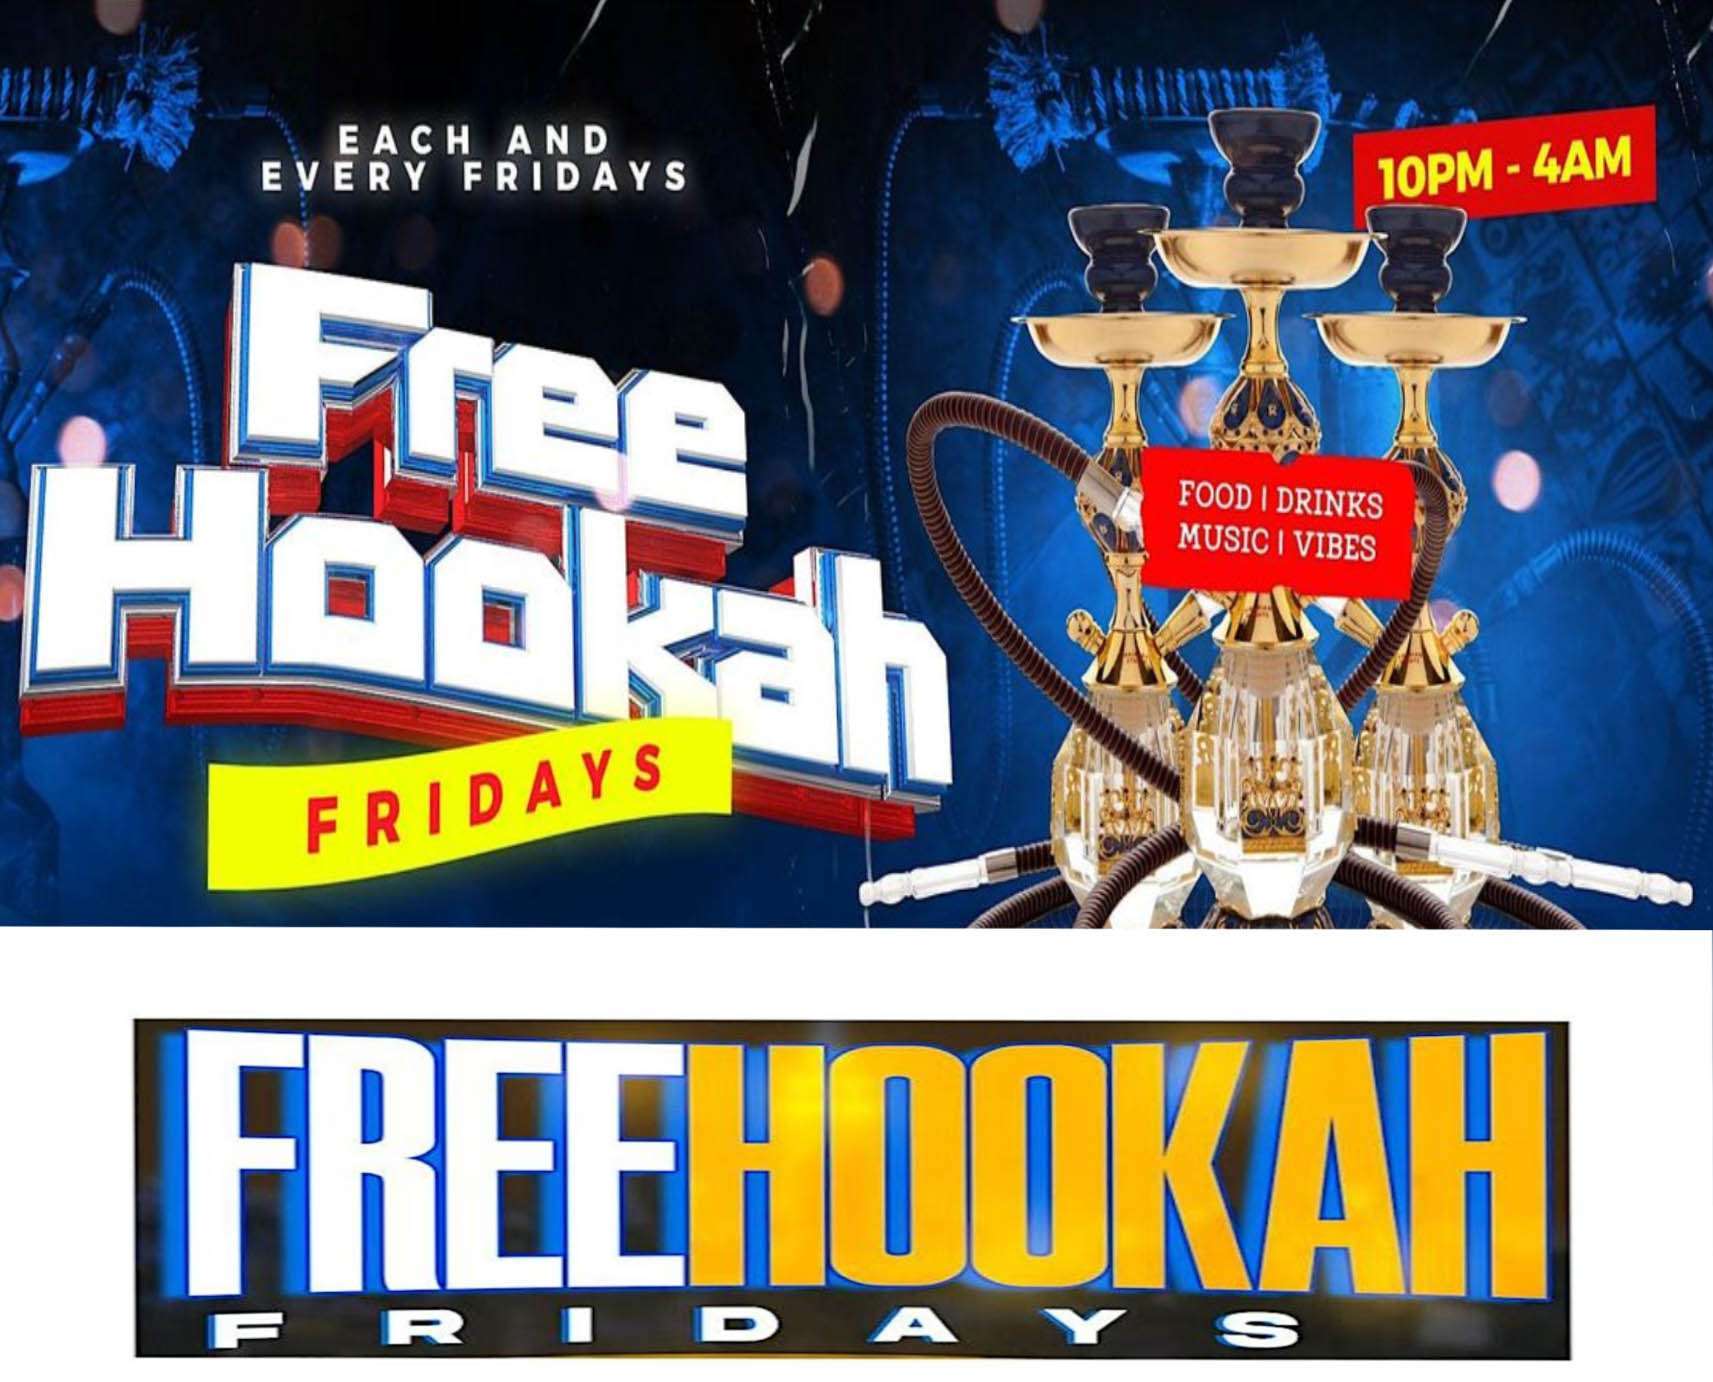 FREE HOOKAH FRIDAYS